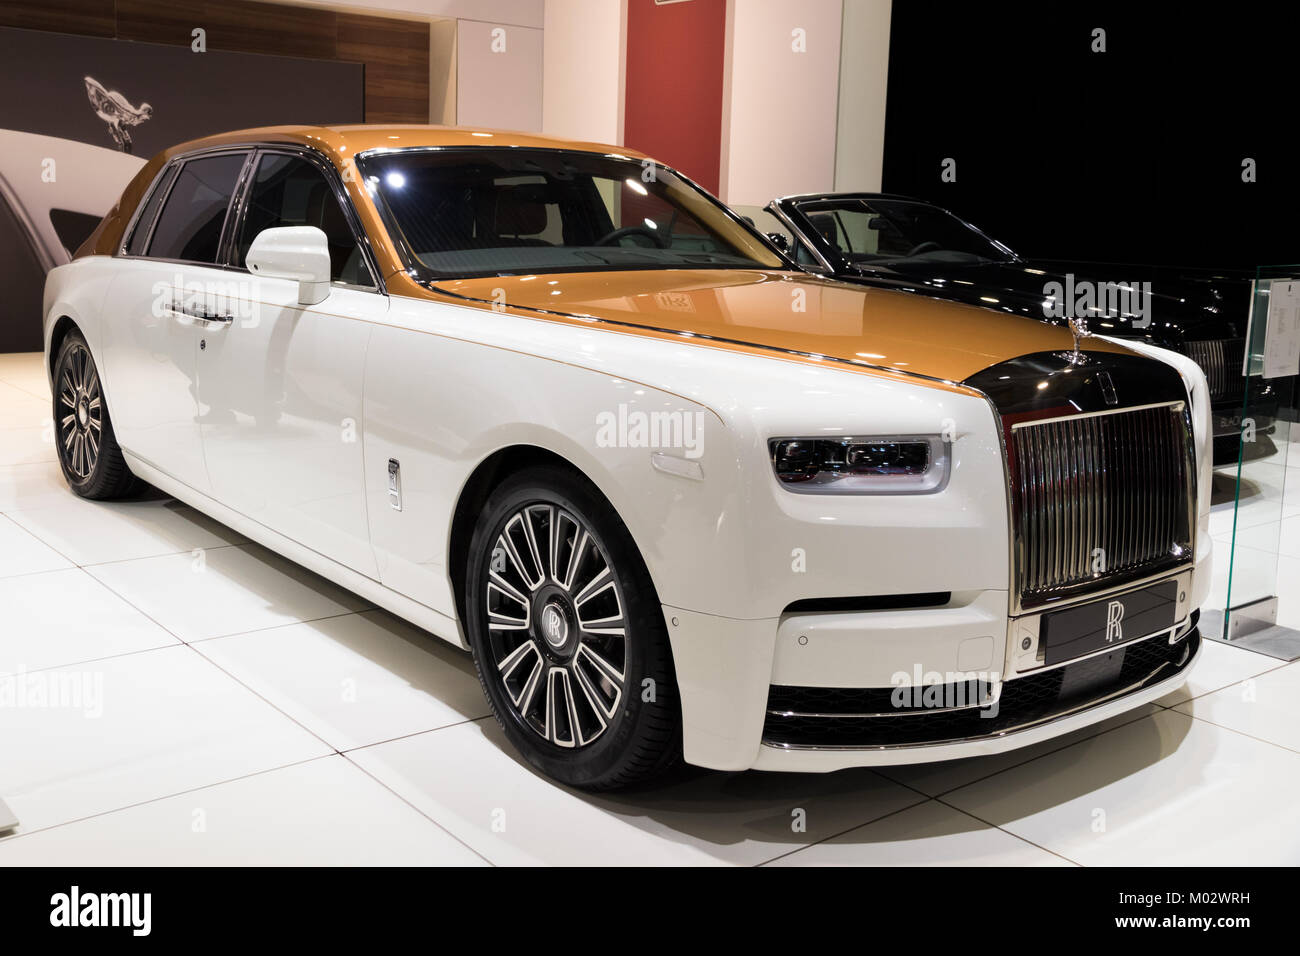 BRUSSELS - JAN 10, 2018: Rolls Royce Phantom luxury saloon car showcased at the Brussels Motor Show. Stock Photo